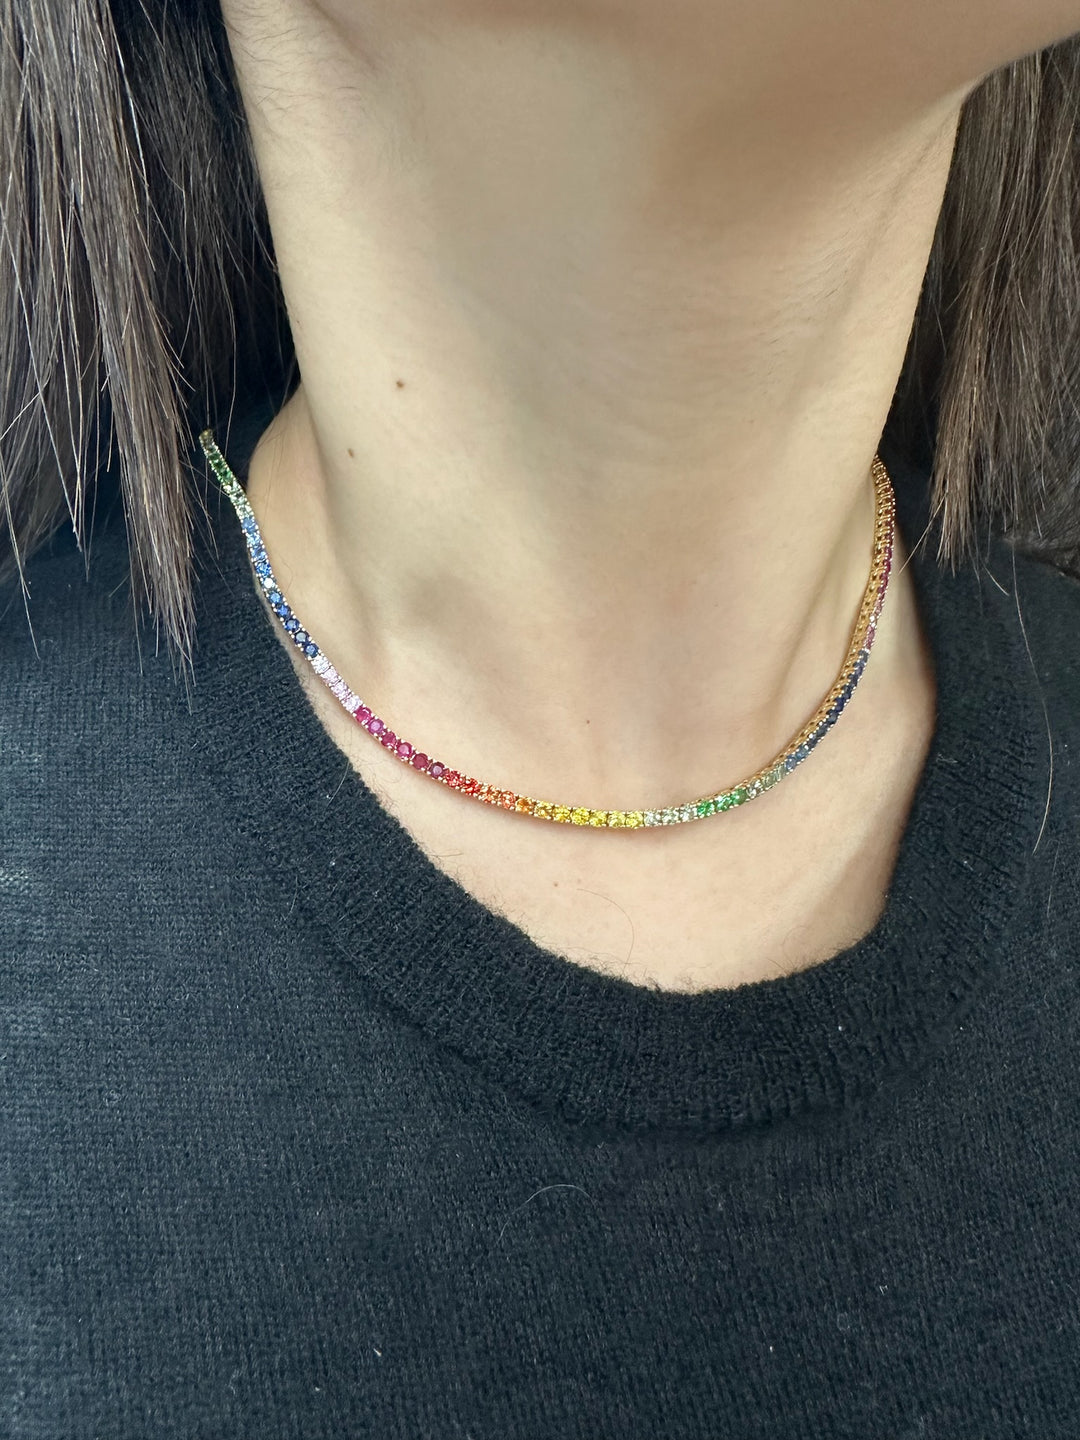 13.02 Carat Rainbow Multicolor Sapphire Tennis Necklace